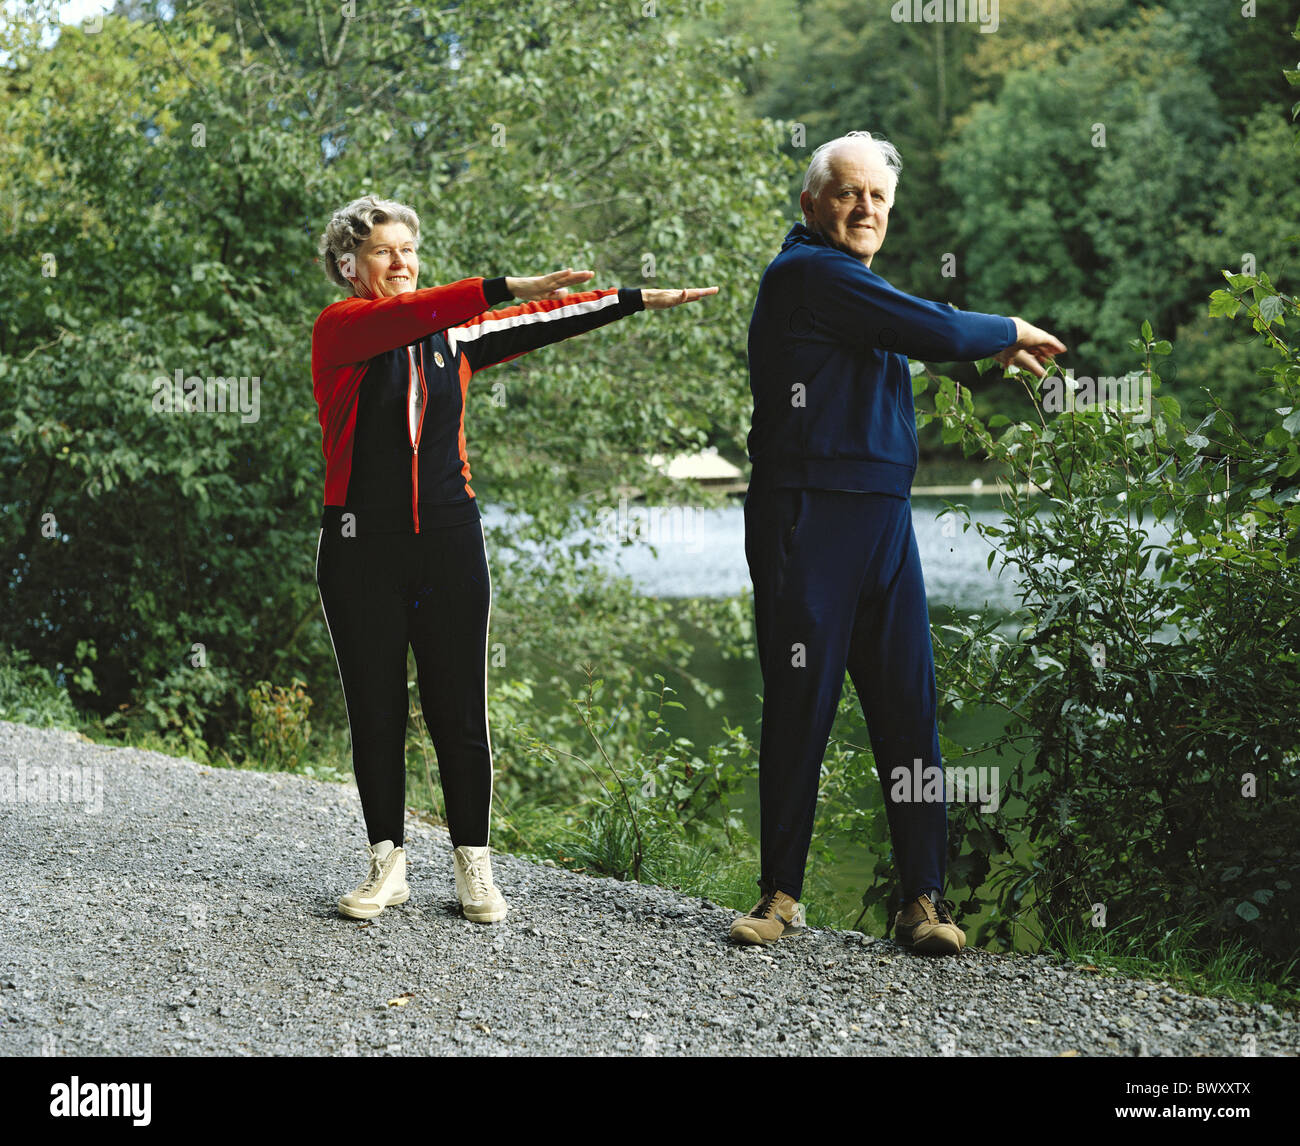 aktive Gymnastik Fitness außerhalb Übungen joggen Sport jogging Senioren paar  paar Trainingsanzug Stockfotografie - Alamy